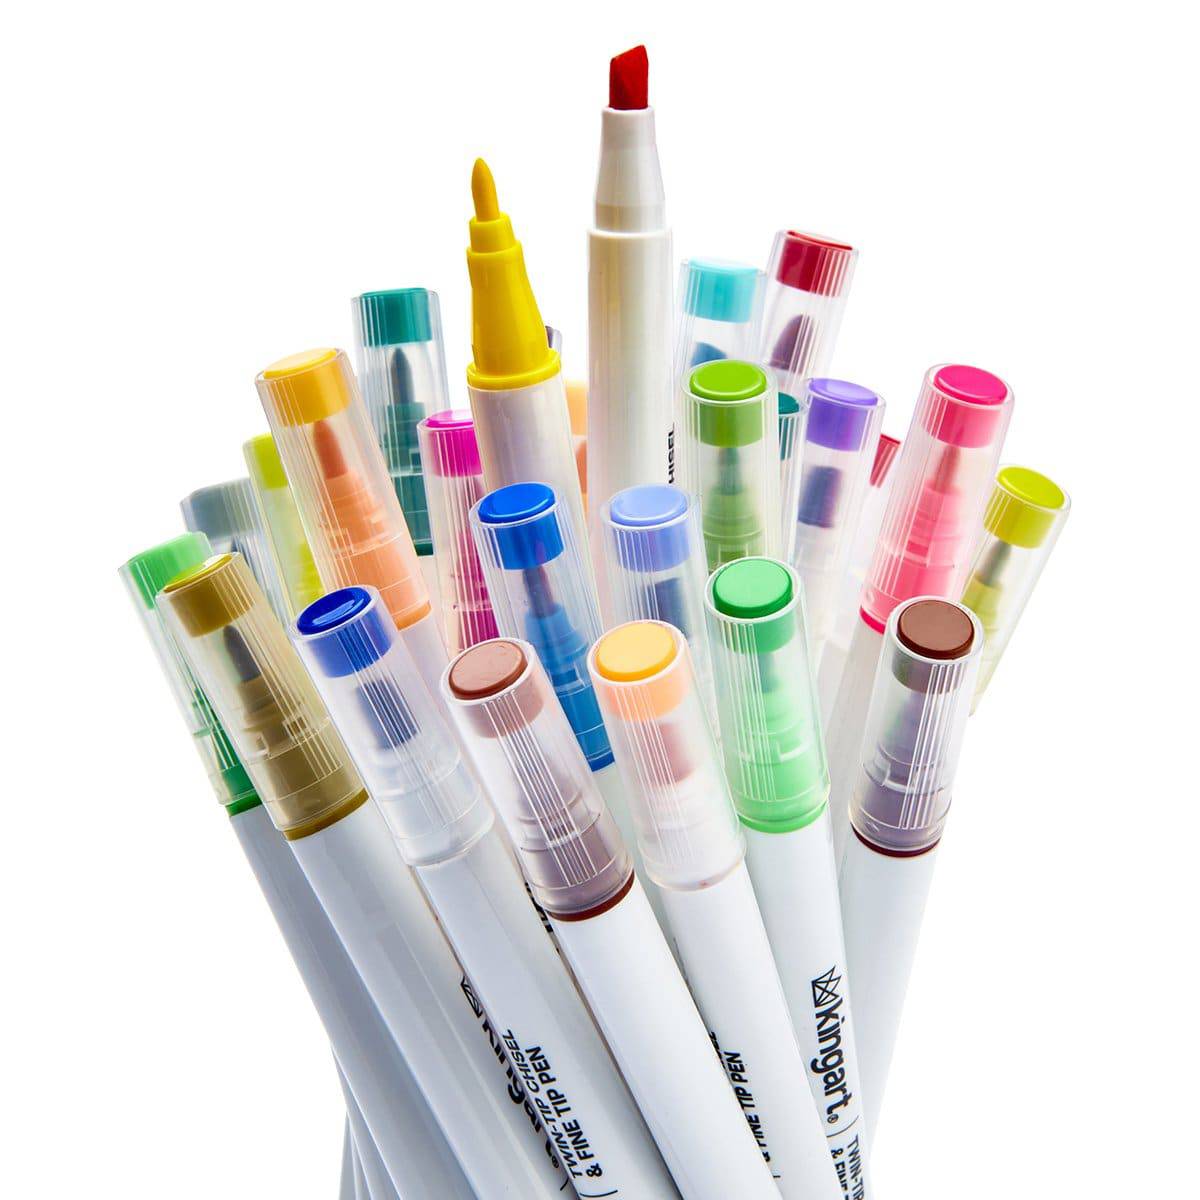 Artesprix Sublimation Markers - Chisel-Tip, Set of 10 Pastel Colors 